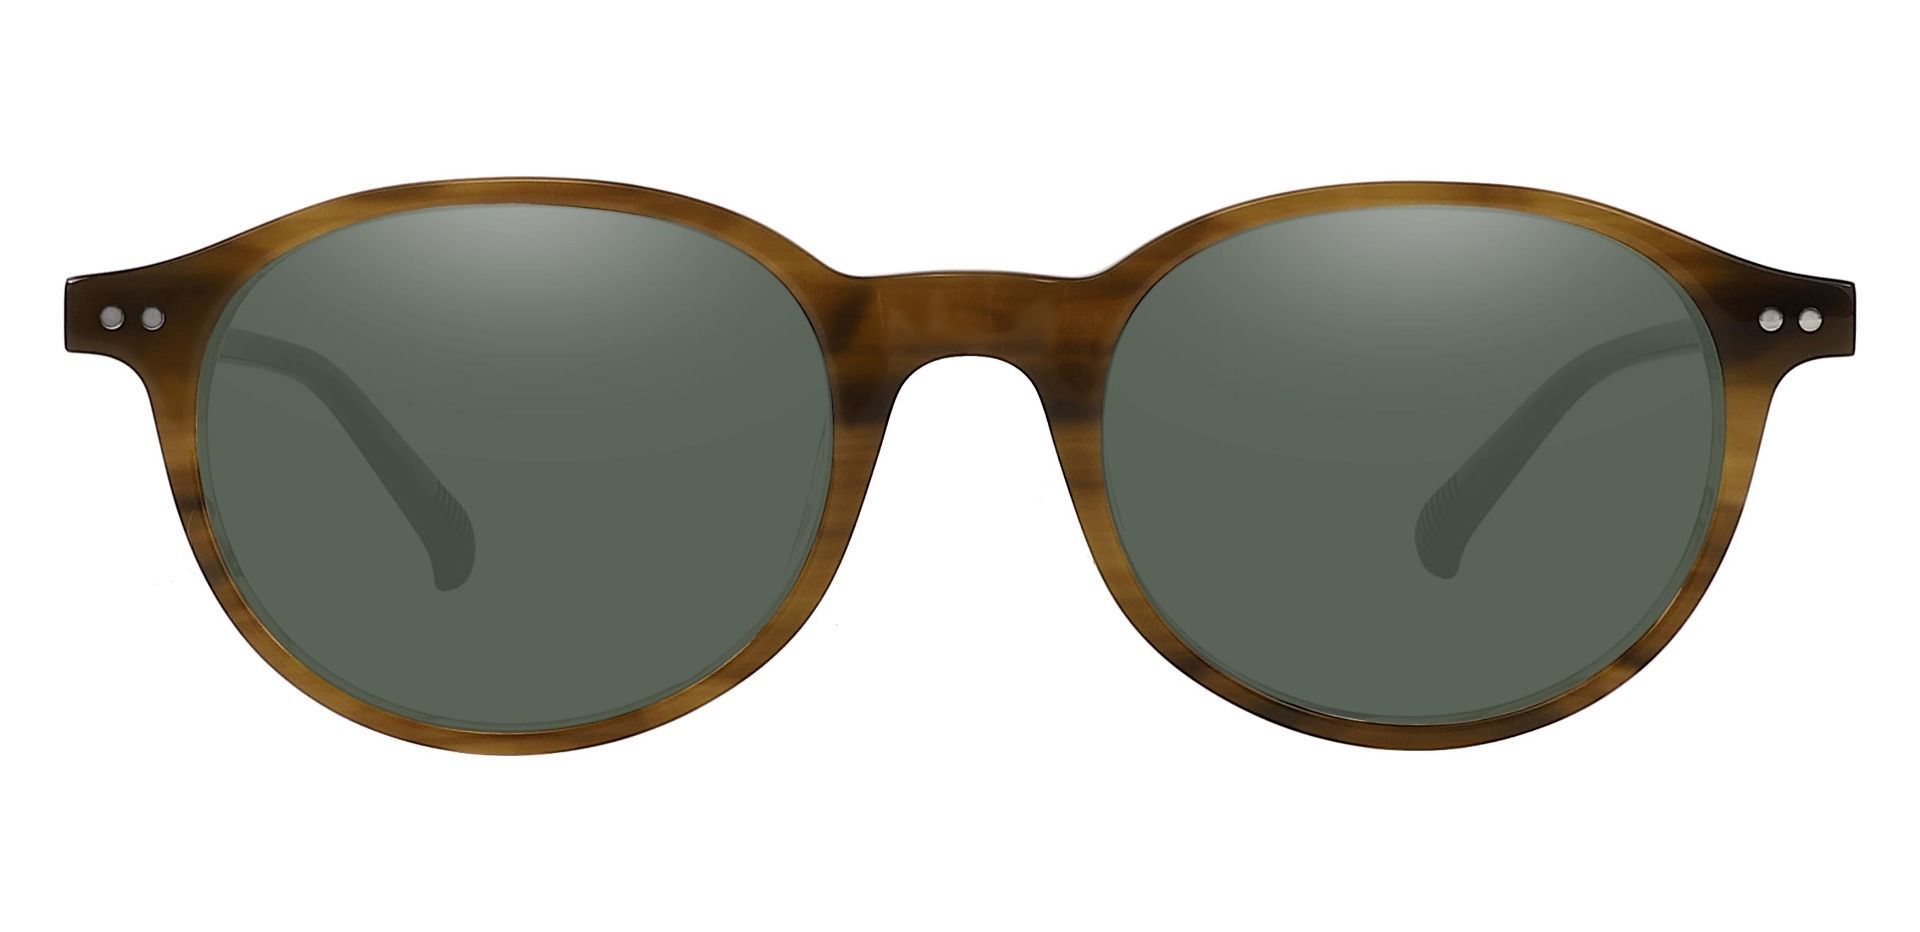 Avon Oval Prescription Sunglasses - Brown Frame With Green Lenses